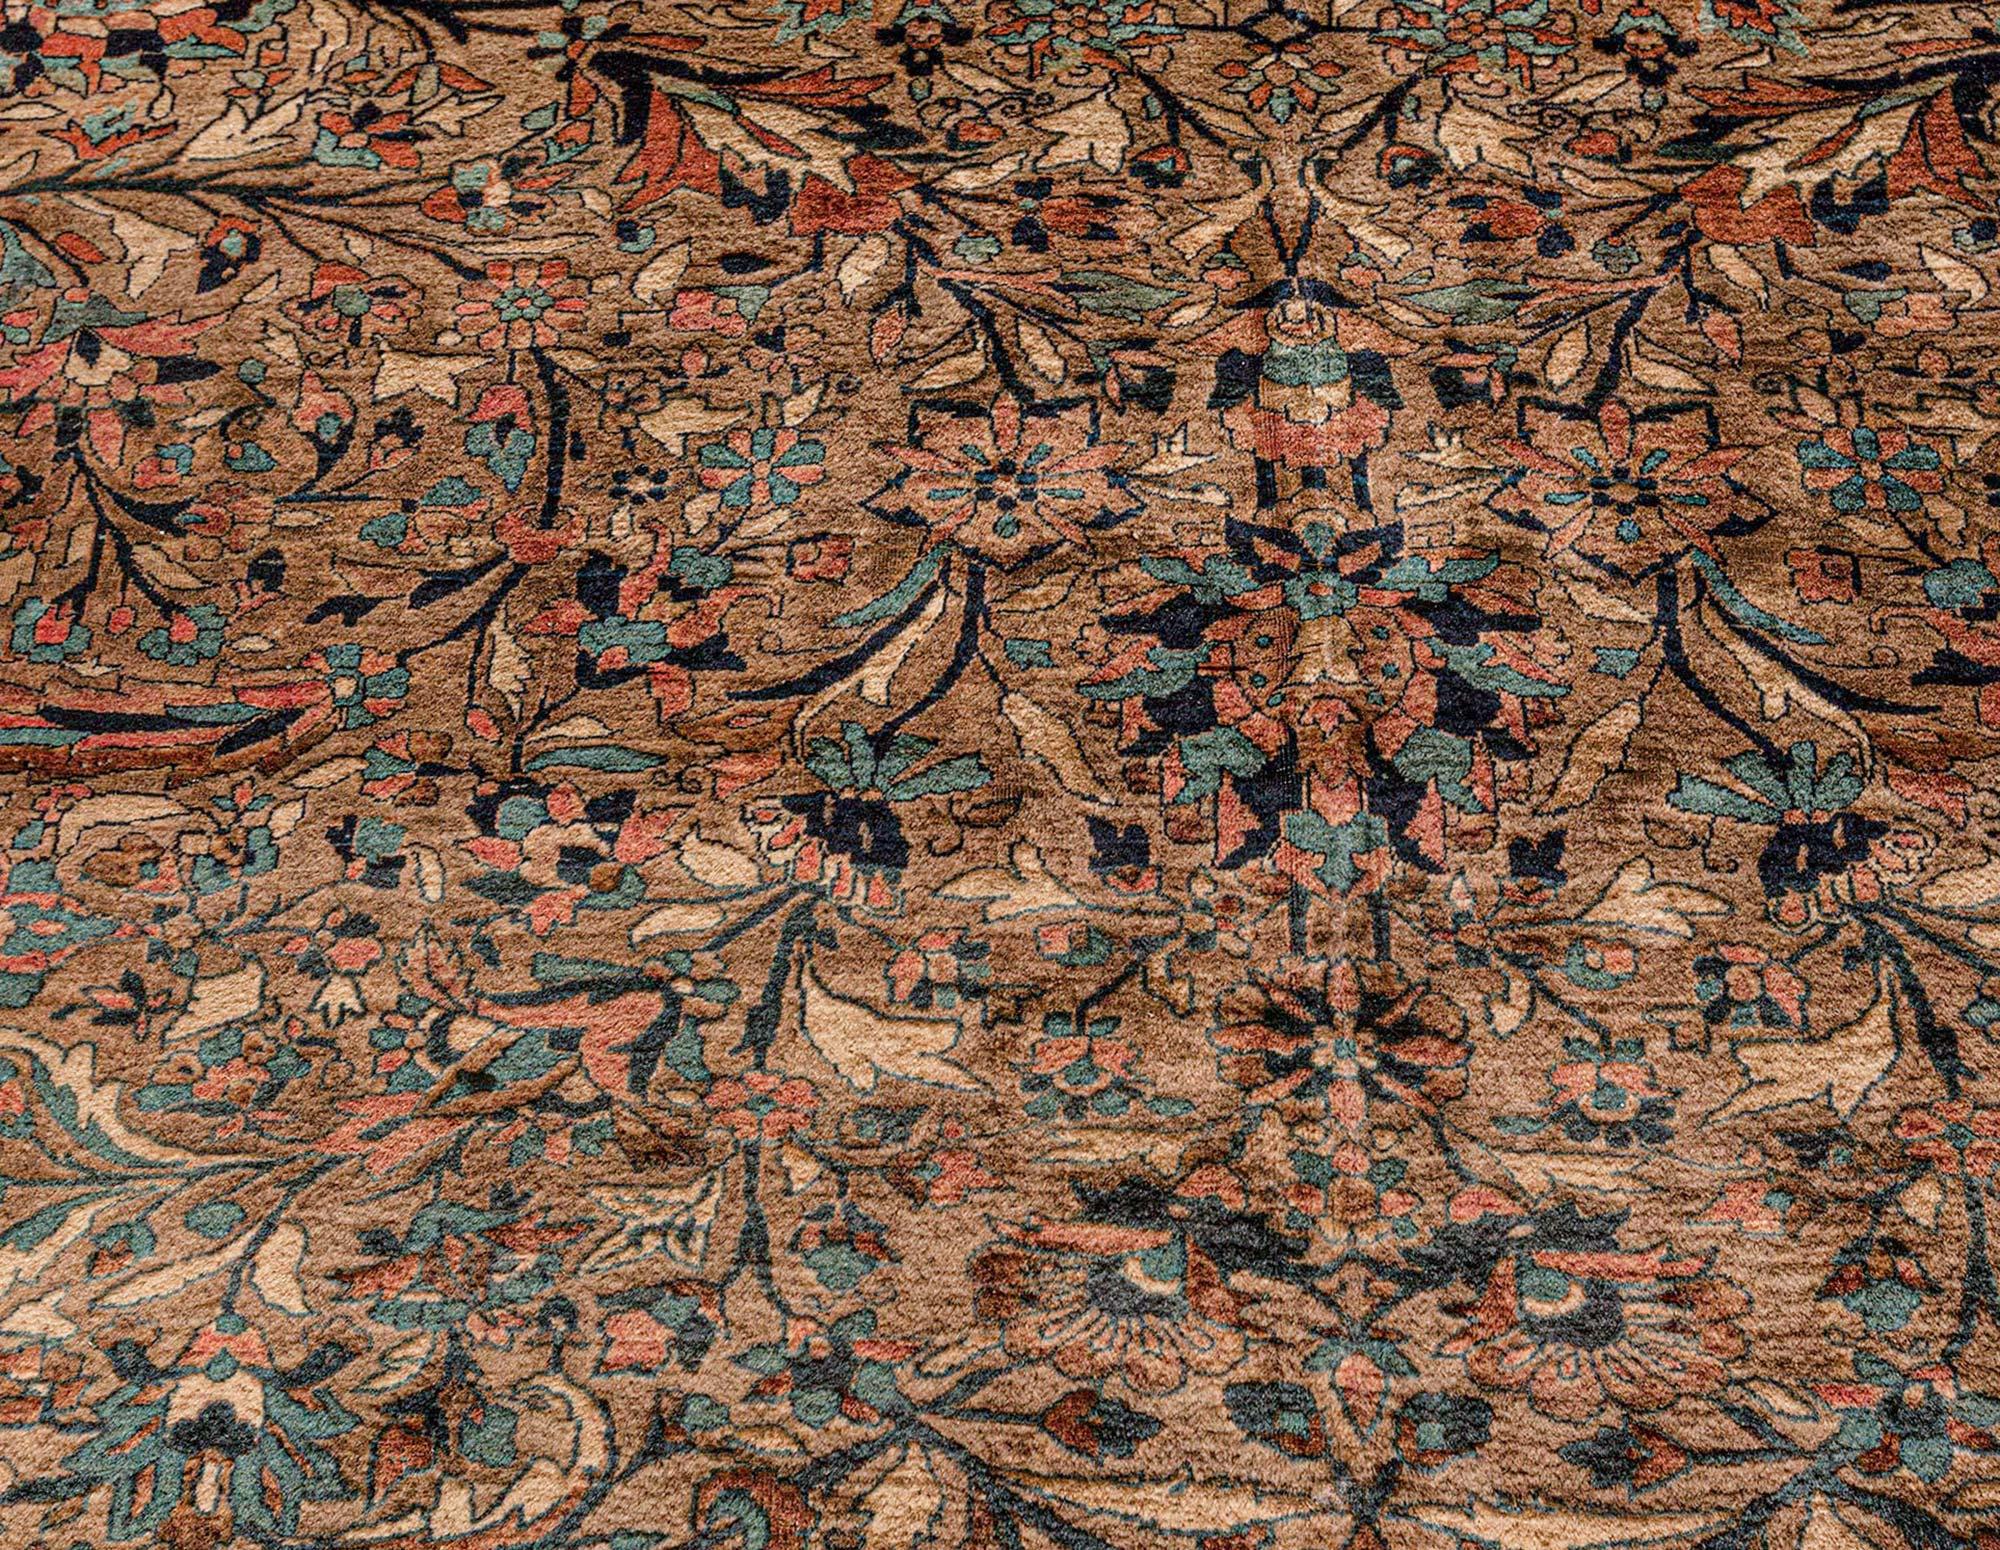 Antique Persian Kashan rug.
Size: 12'3